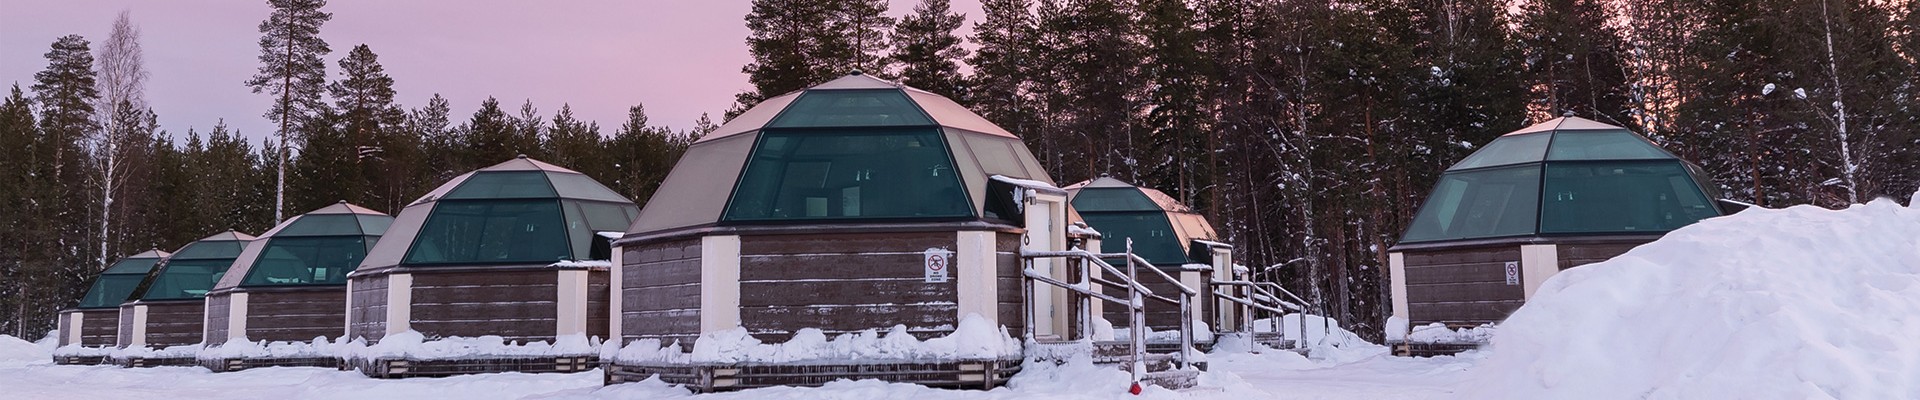 Kakslauttanen Artic Resort, Lapland - Finland Package (3 Nights)